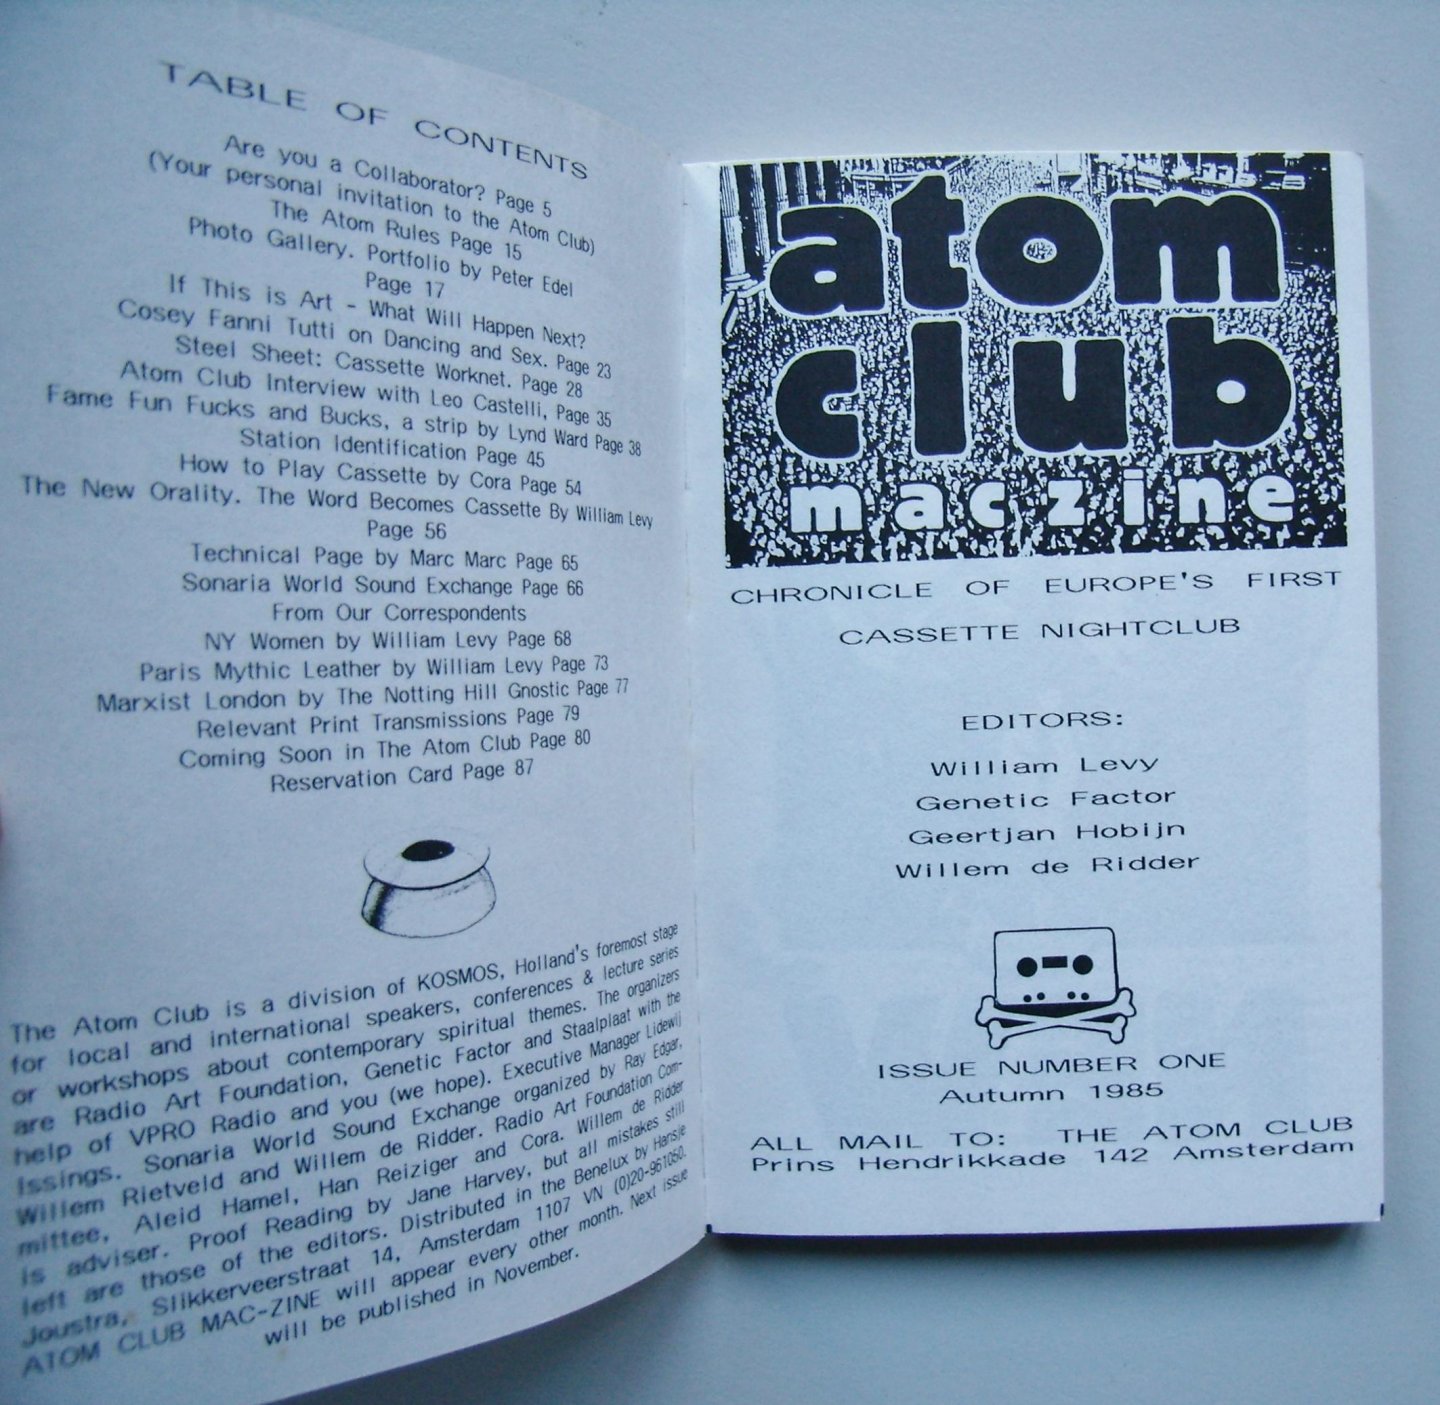 Levy, William / Ridder, Willem de / Factor, Genetic / Hobijn, Geertjan - Atom Club Magazine Cassette Explosion